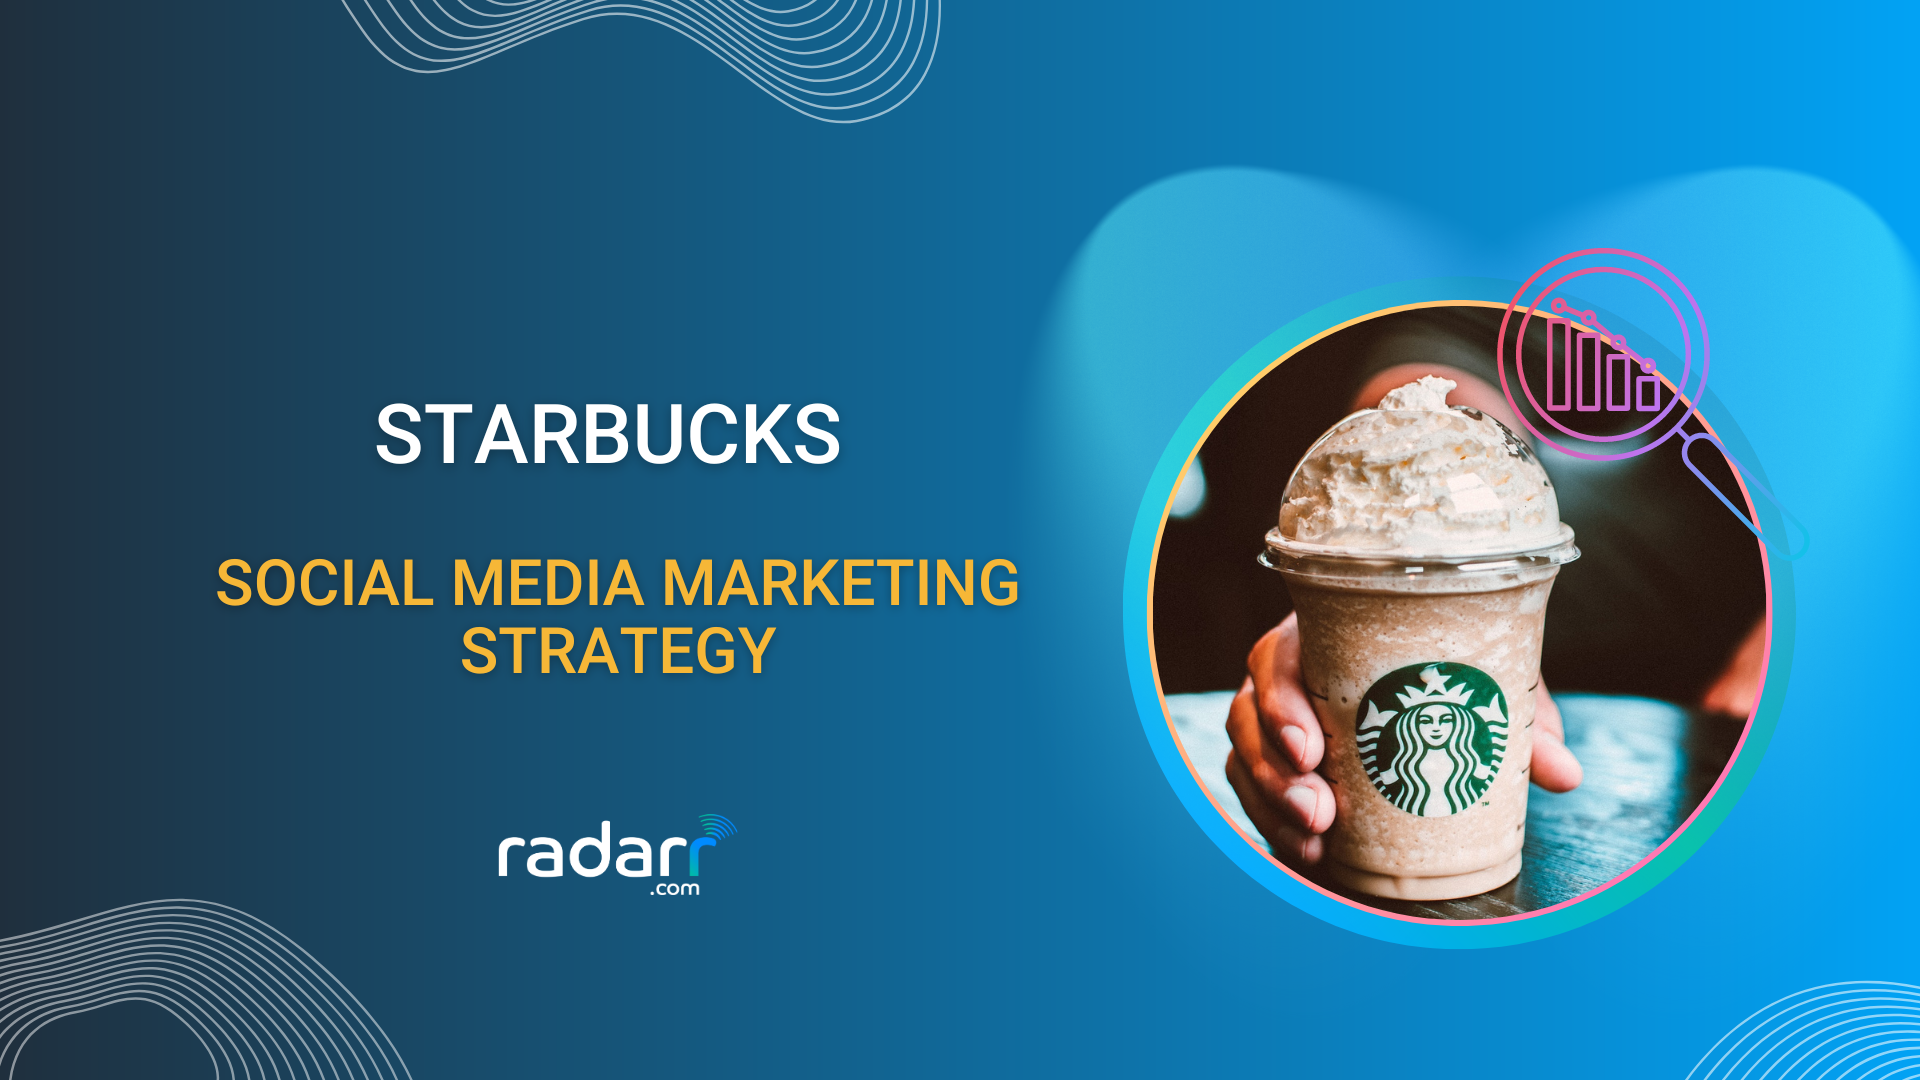 starbucks social media marketing strategy